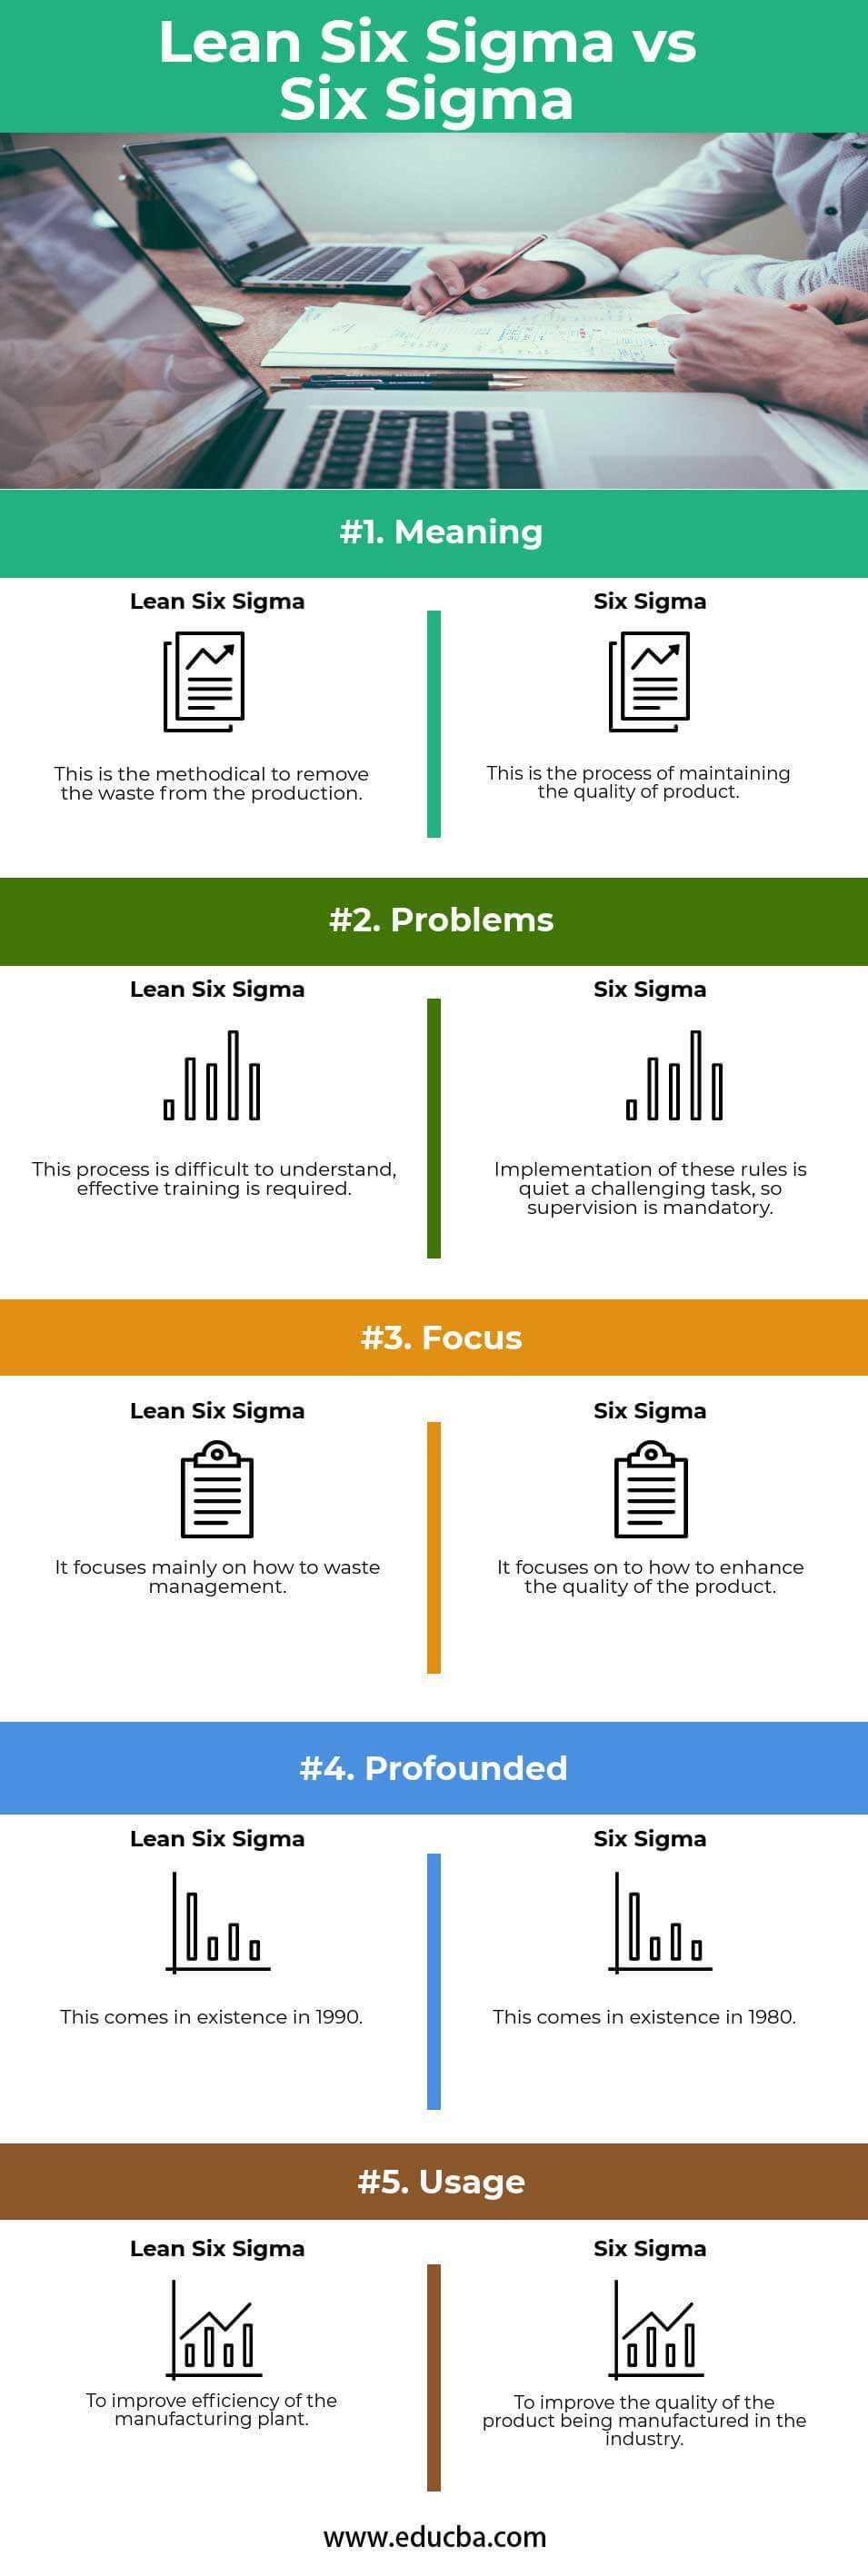 Lean Six Sigma vs Six Sigma info